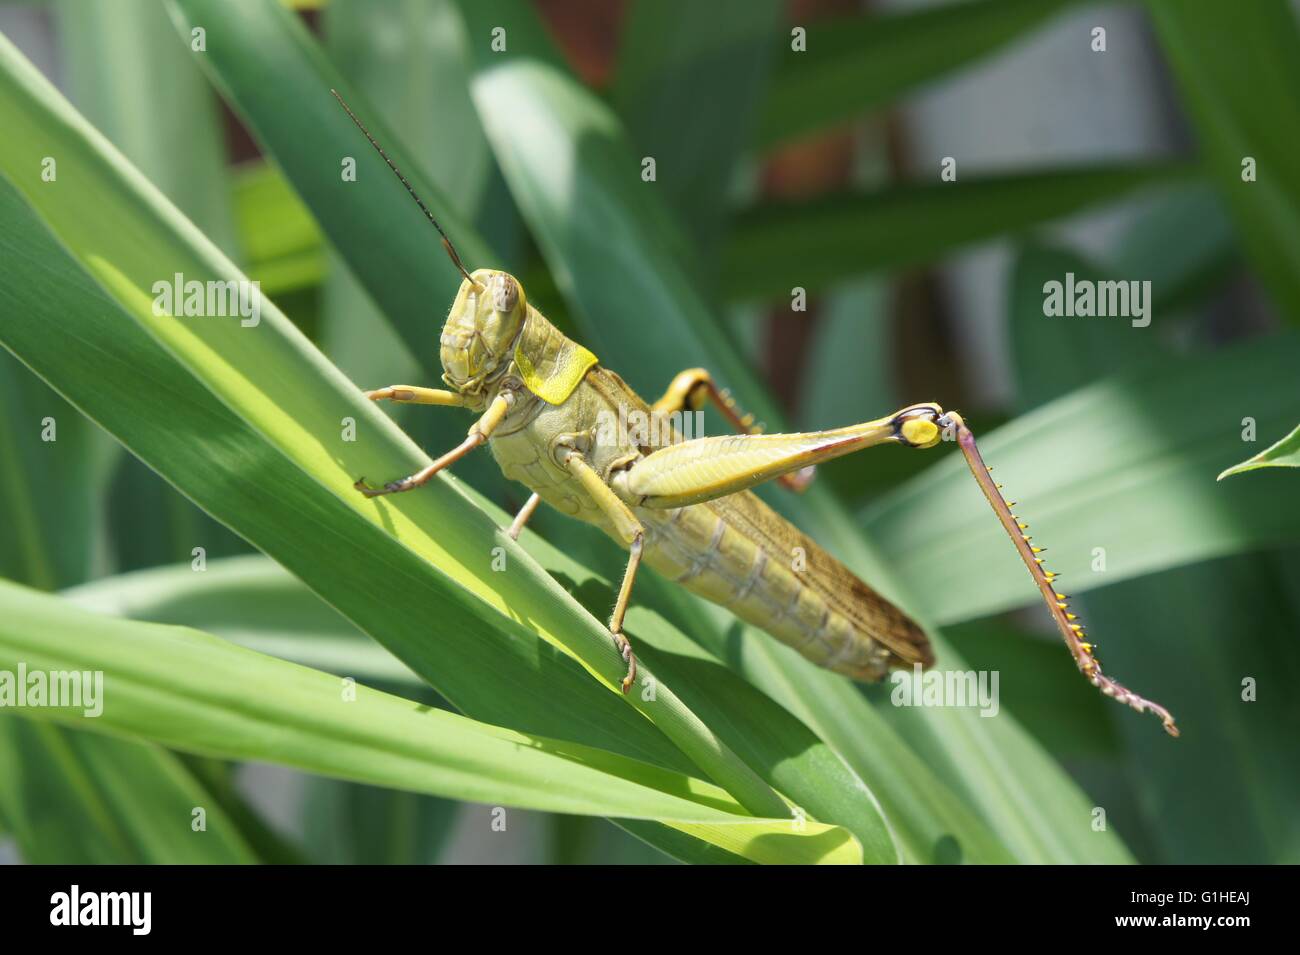 Green Grasshopper on Plant. Stock Photo